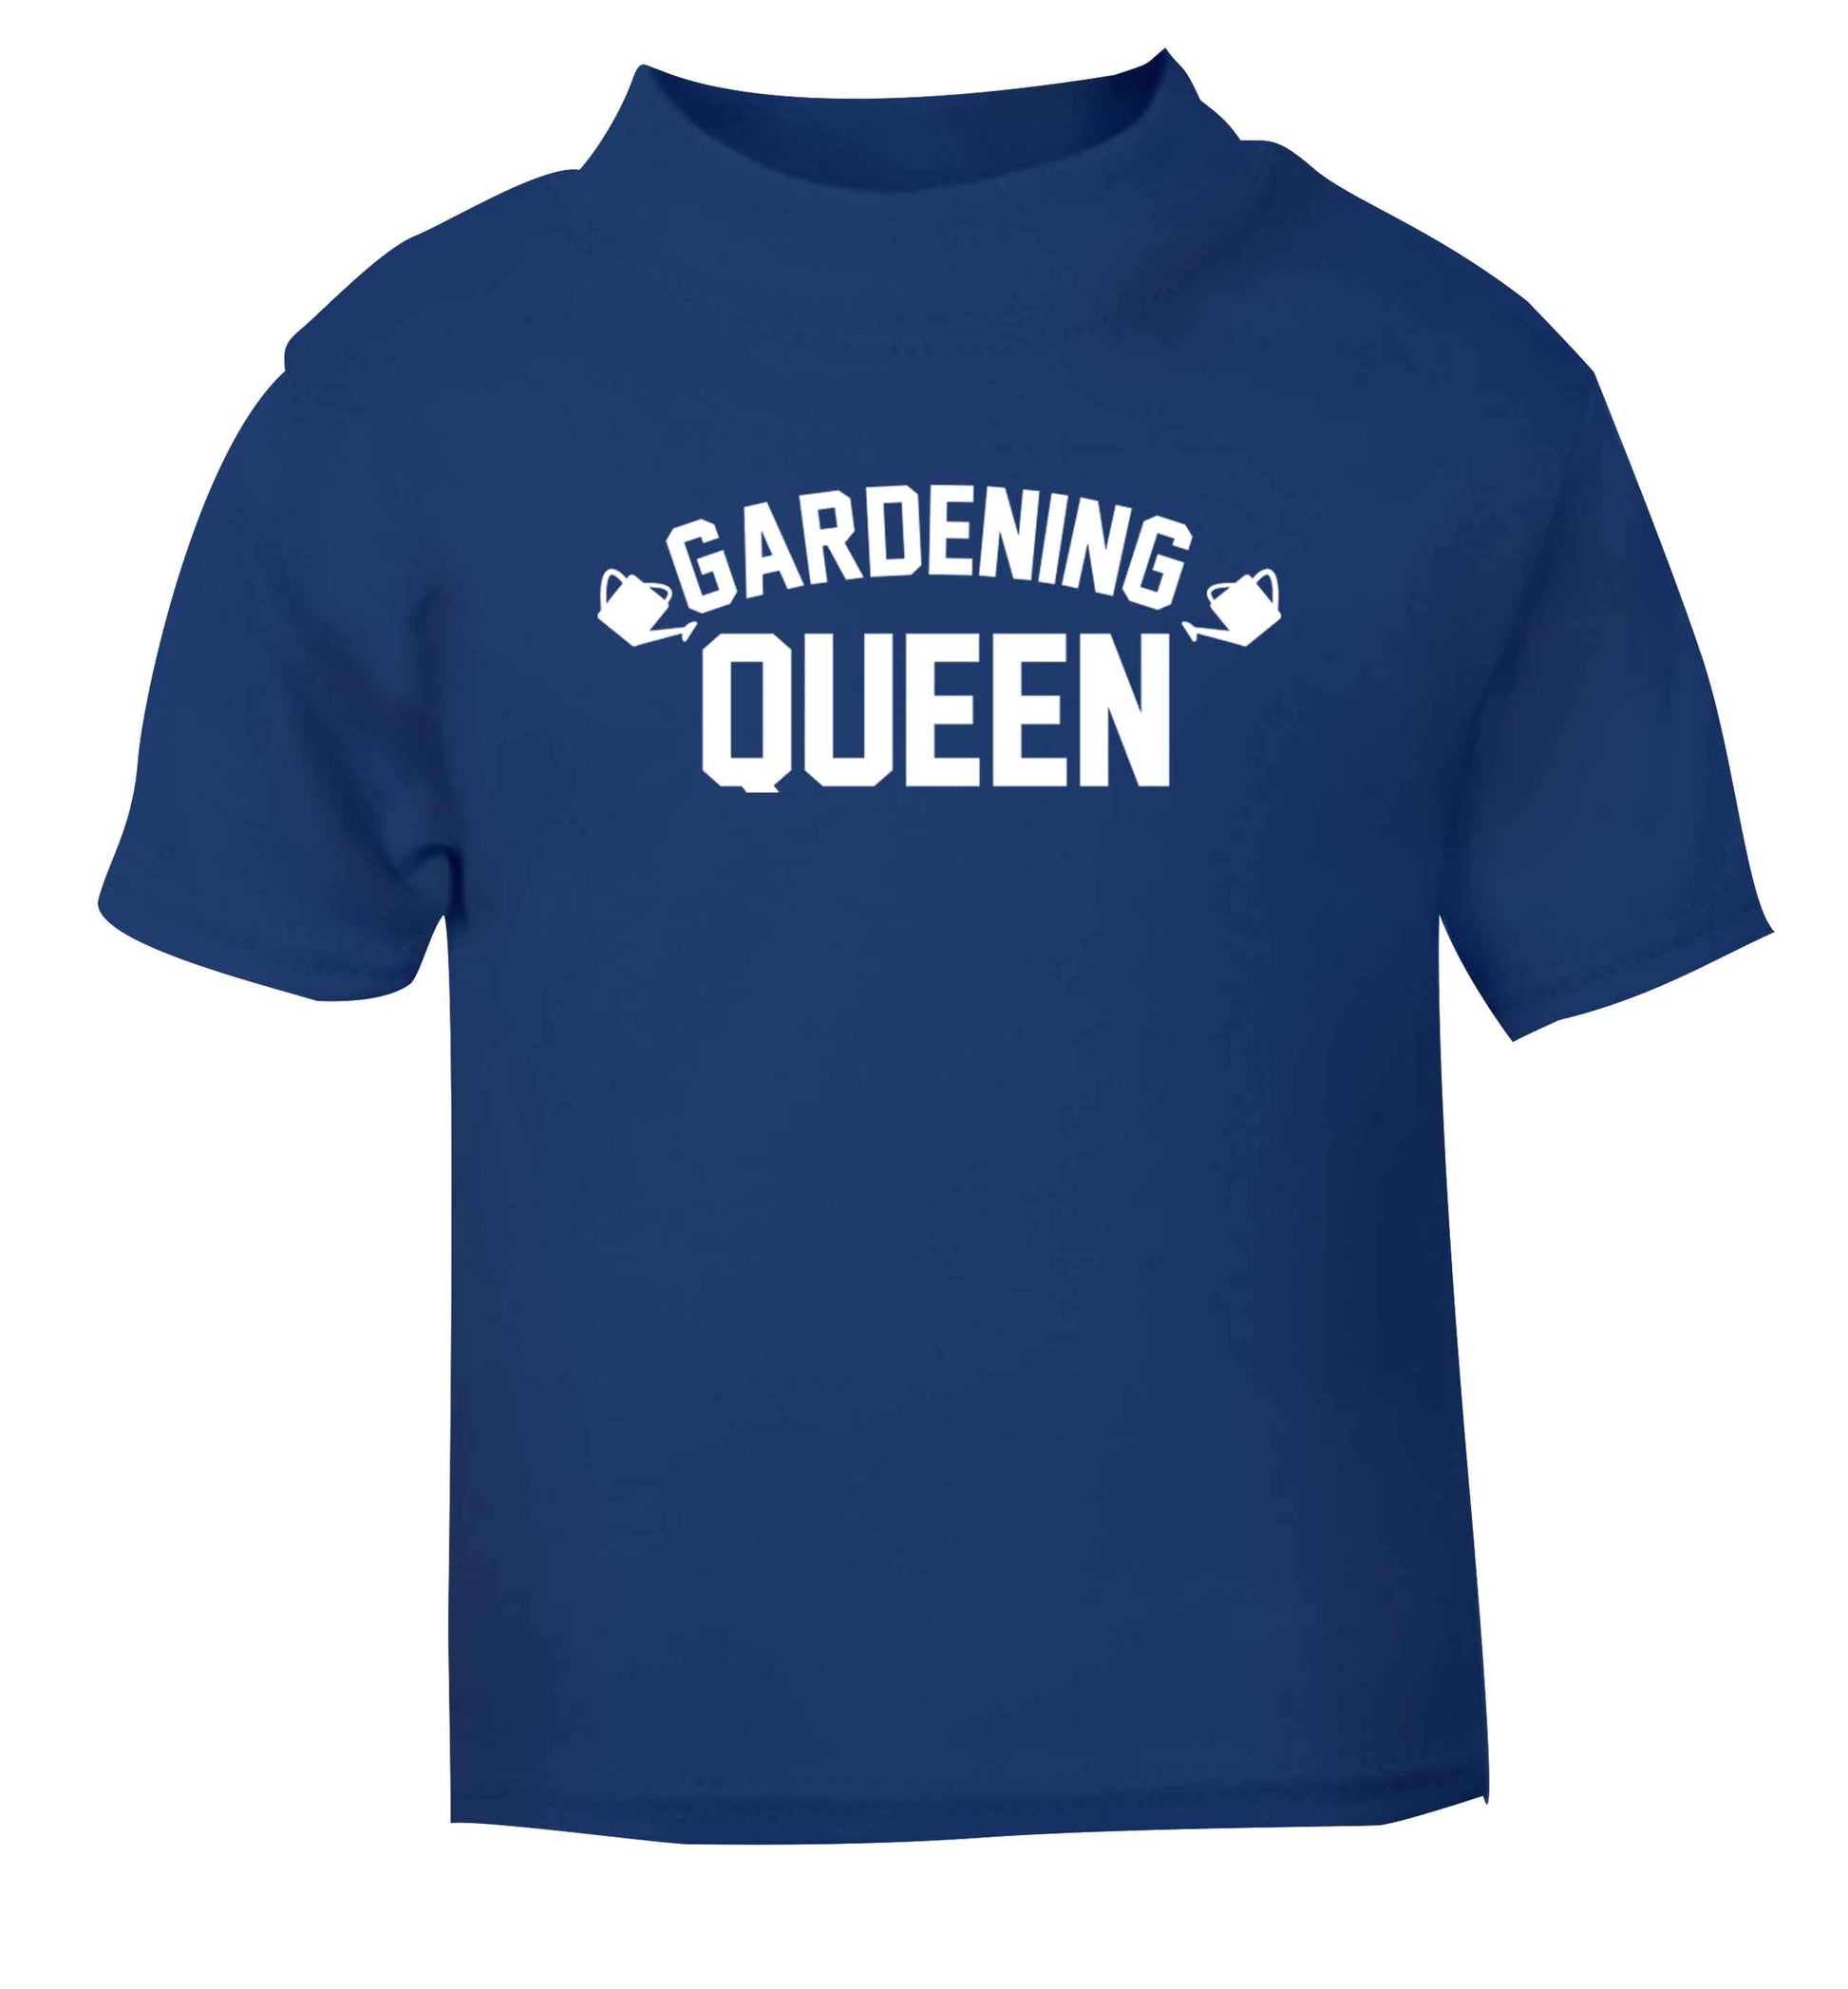 Gardening queen blue Baby Toddler Tshirt 2 Years